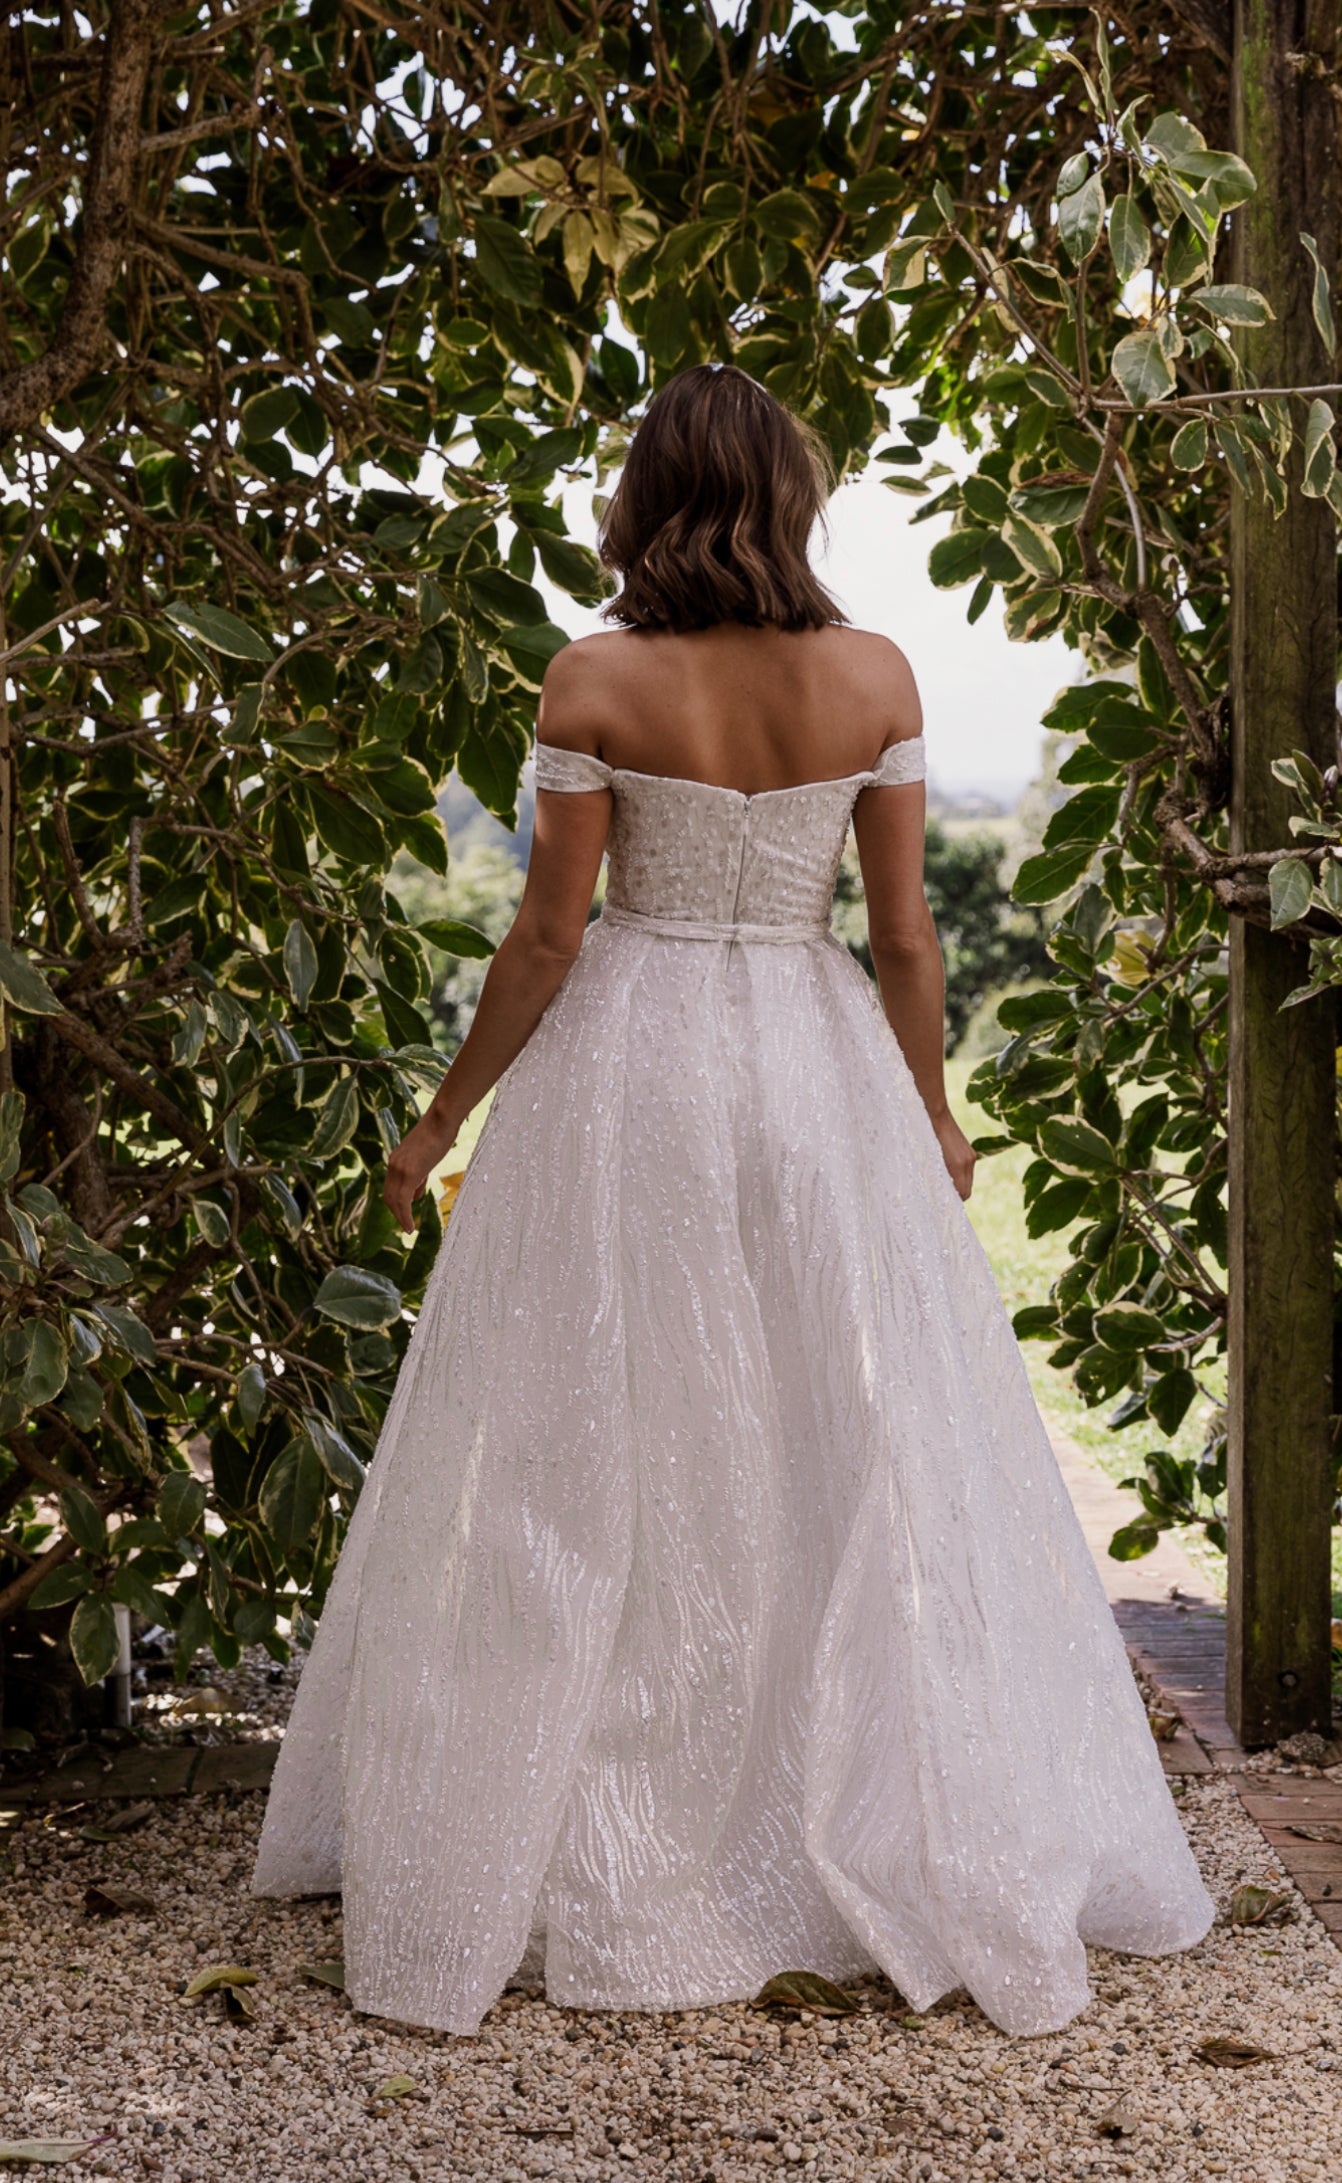 Adrienne by Tania Olsen Vintage White Wedding Dress